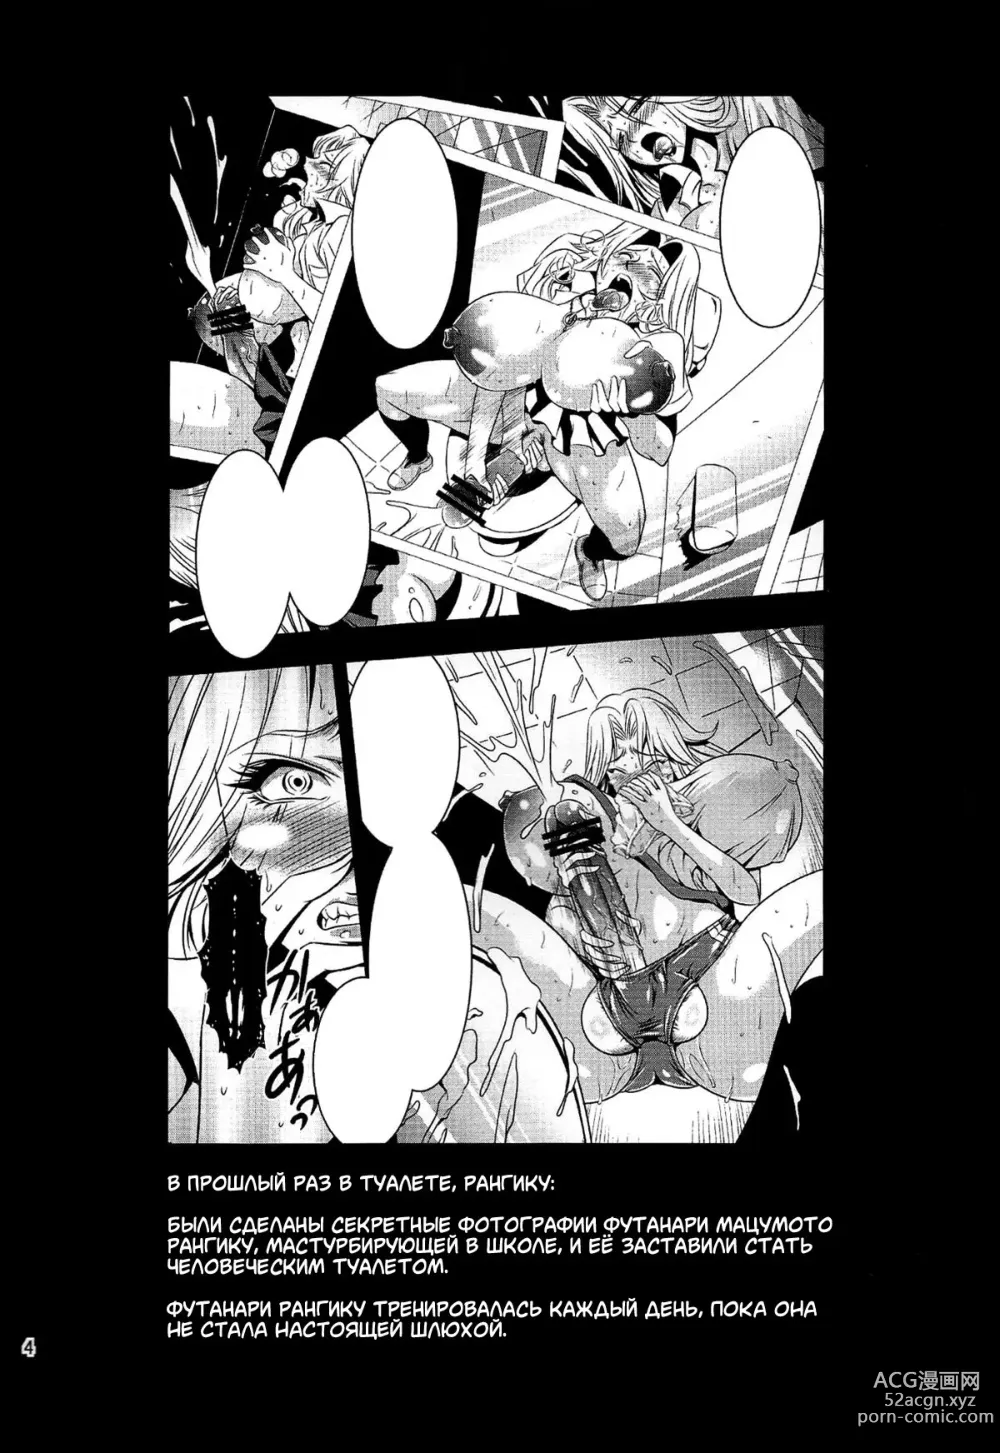 Page 4 of doujinshi Futagiku